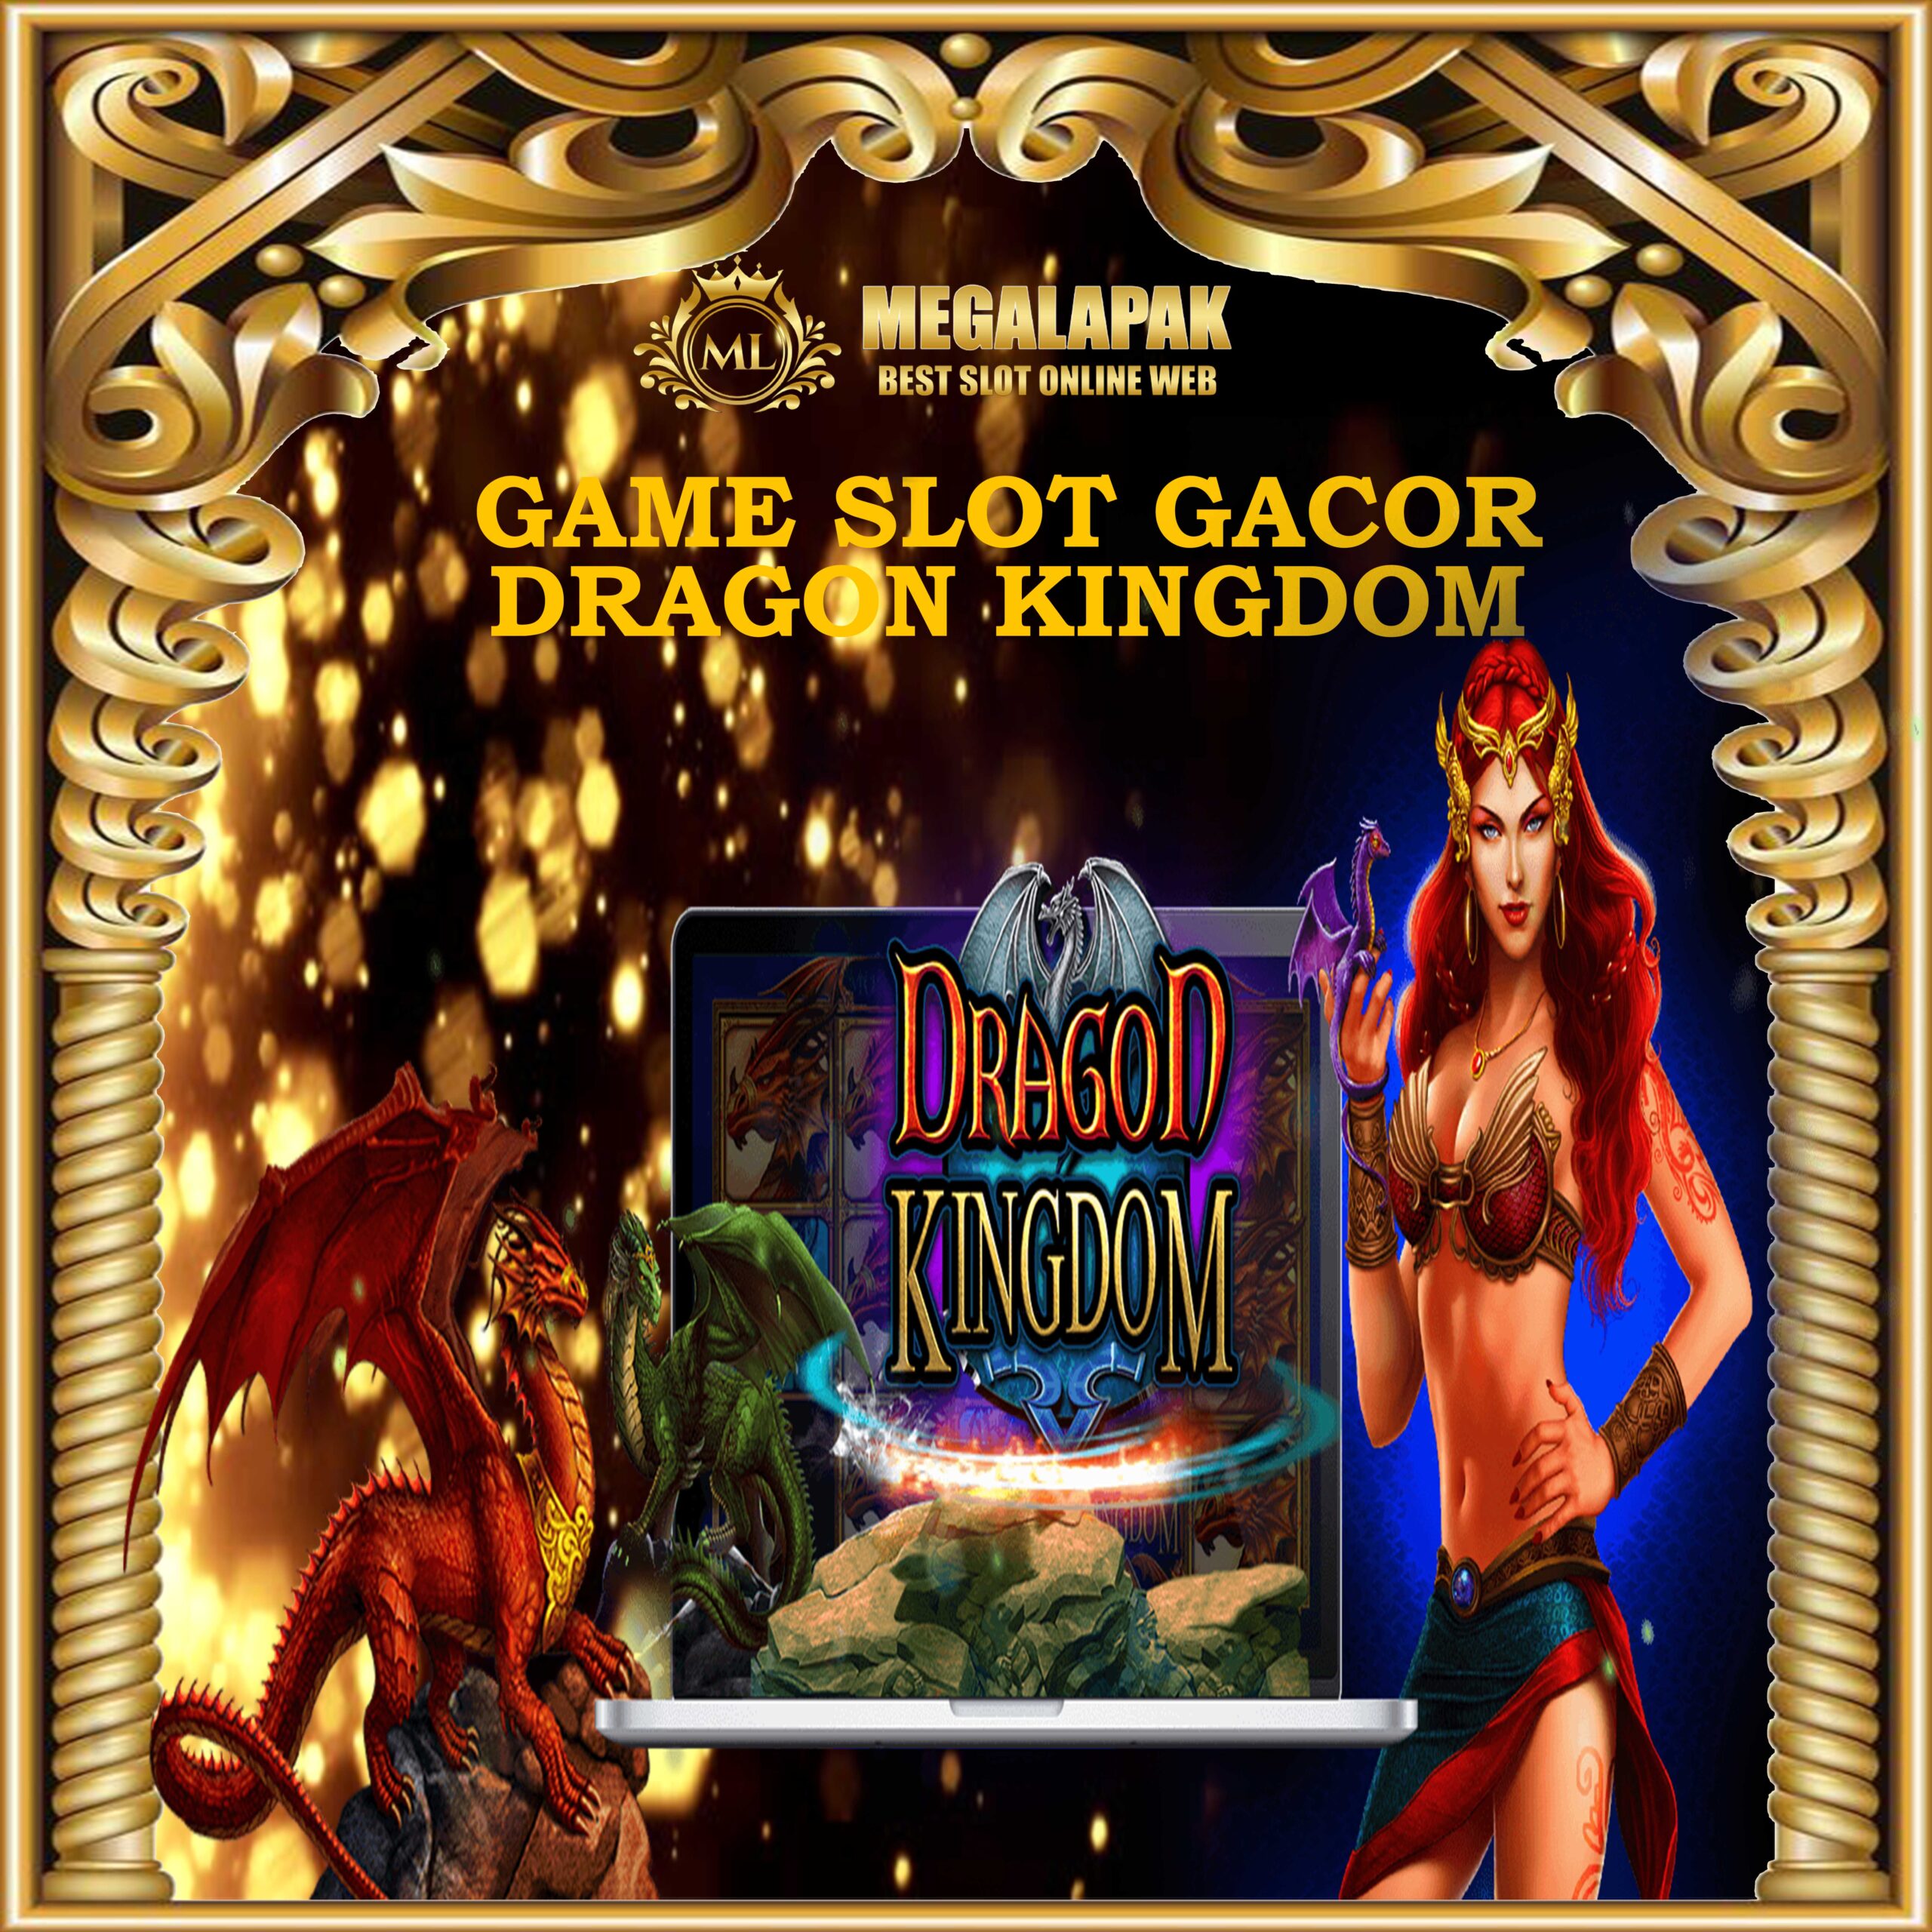 Slot Gacor Dragon Kingdom Megalapak